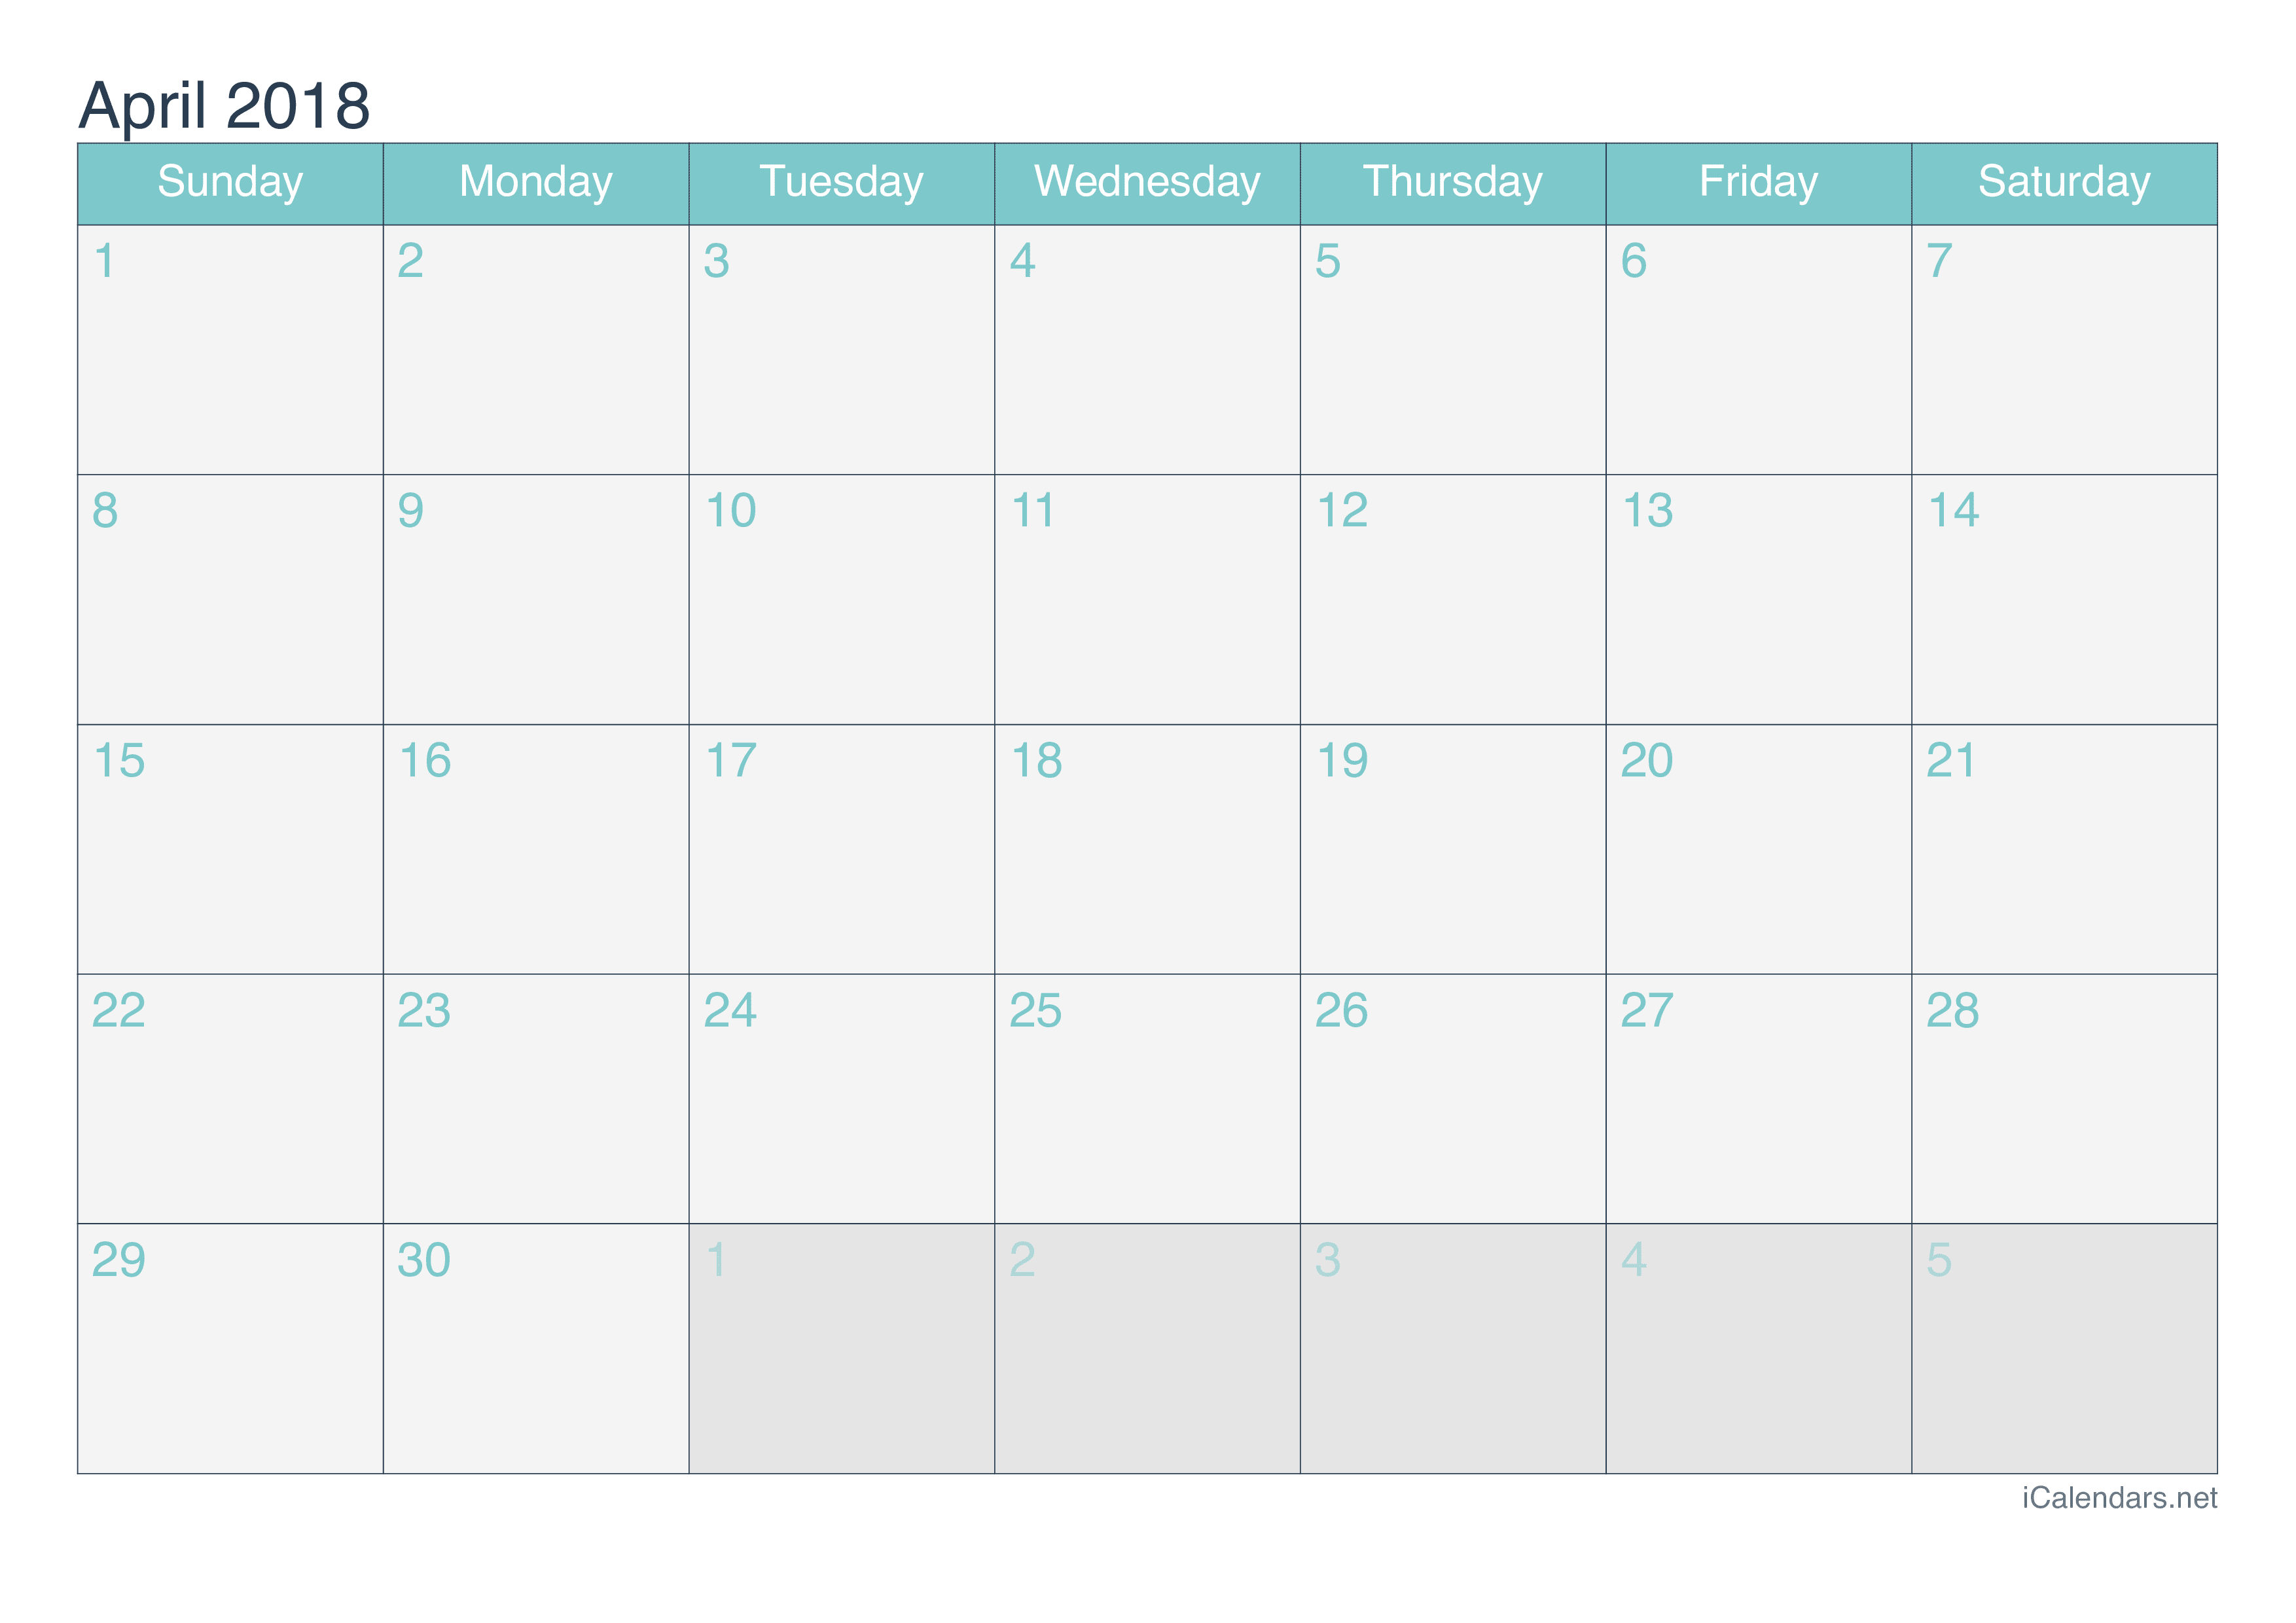 April 2018 Printable Calendar icalendars net